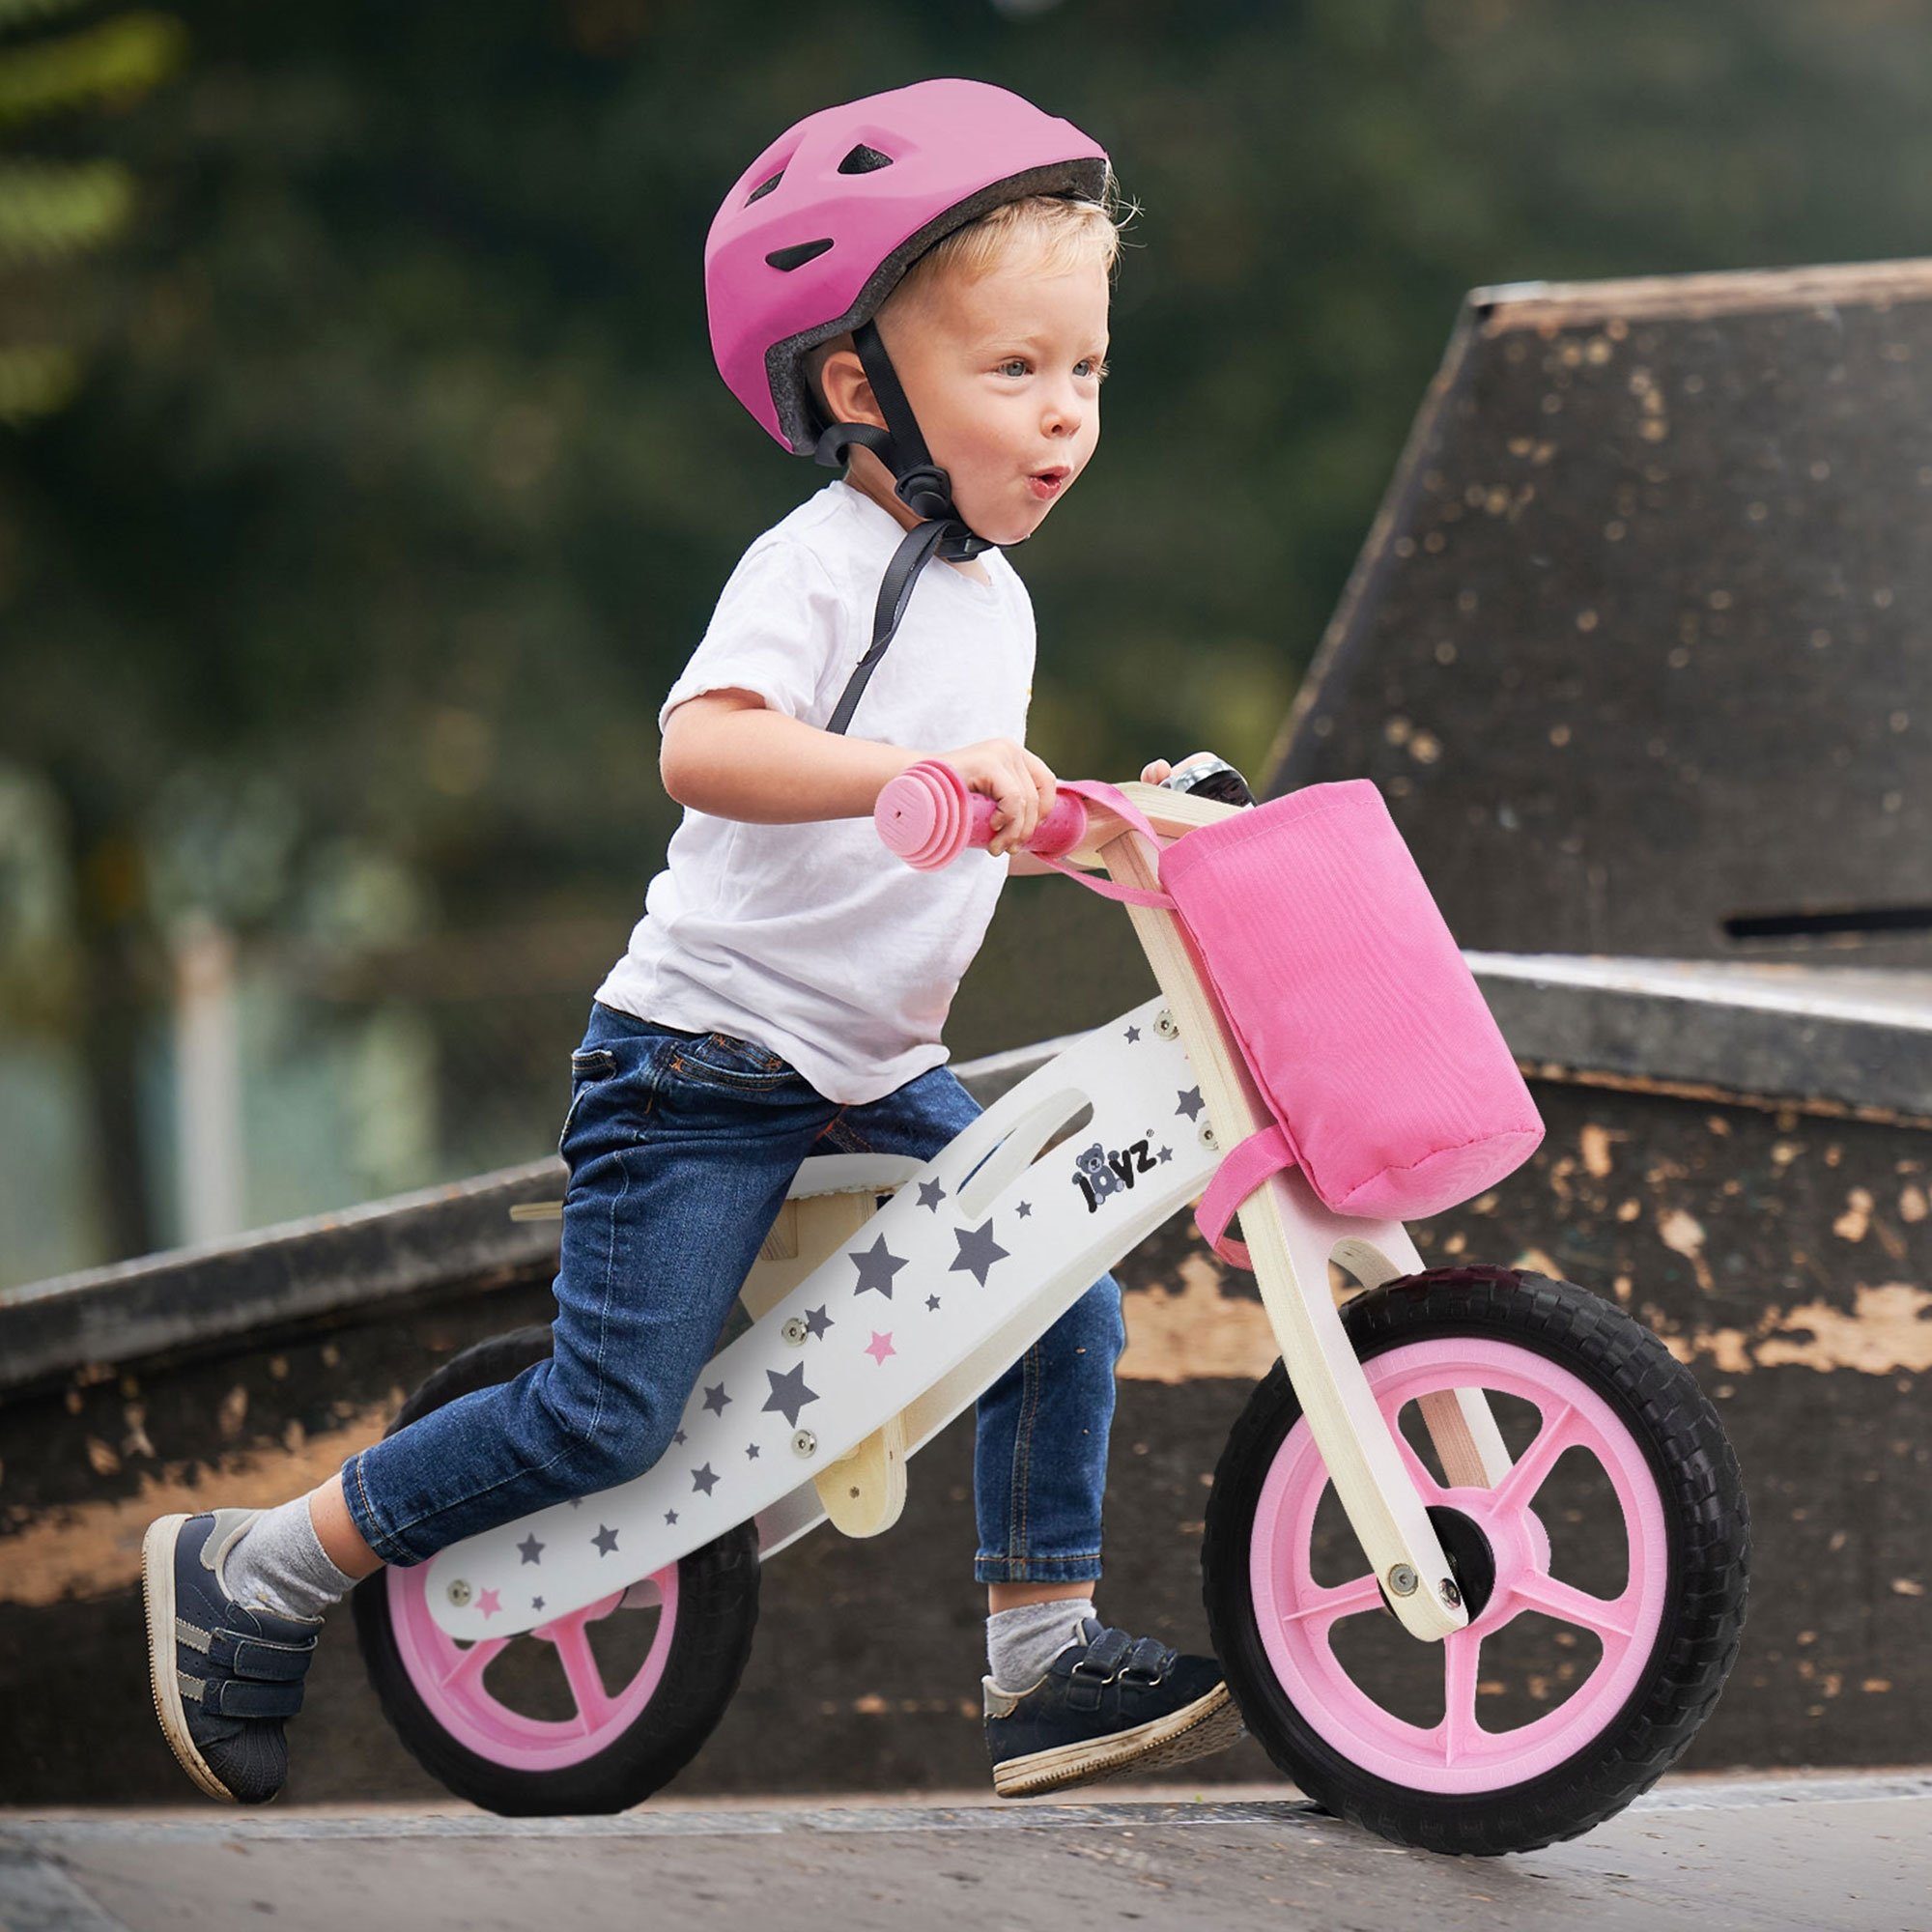 Joyz Laufrad Lauflernrad Kinderfahrrad Kinderlaufrad Holzlaufrad 11 Zoll, Holz Pink ab 2 Jahren verstellbarer Sitz 11 Zoll-EVA-Räder Stoffbeutel